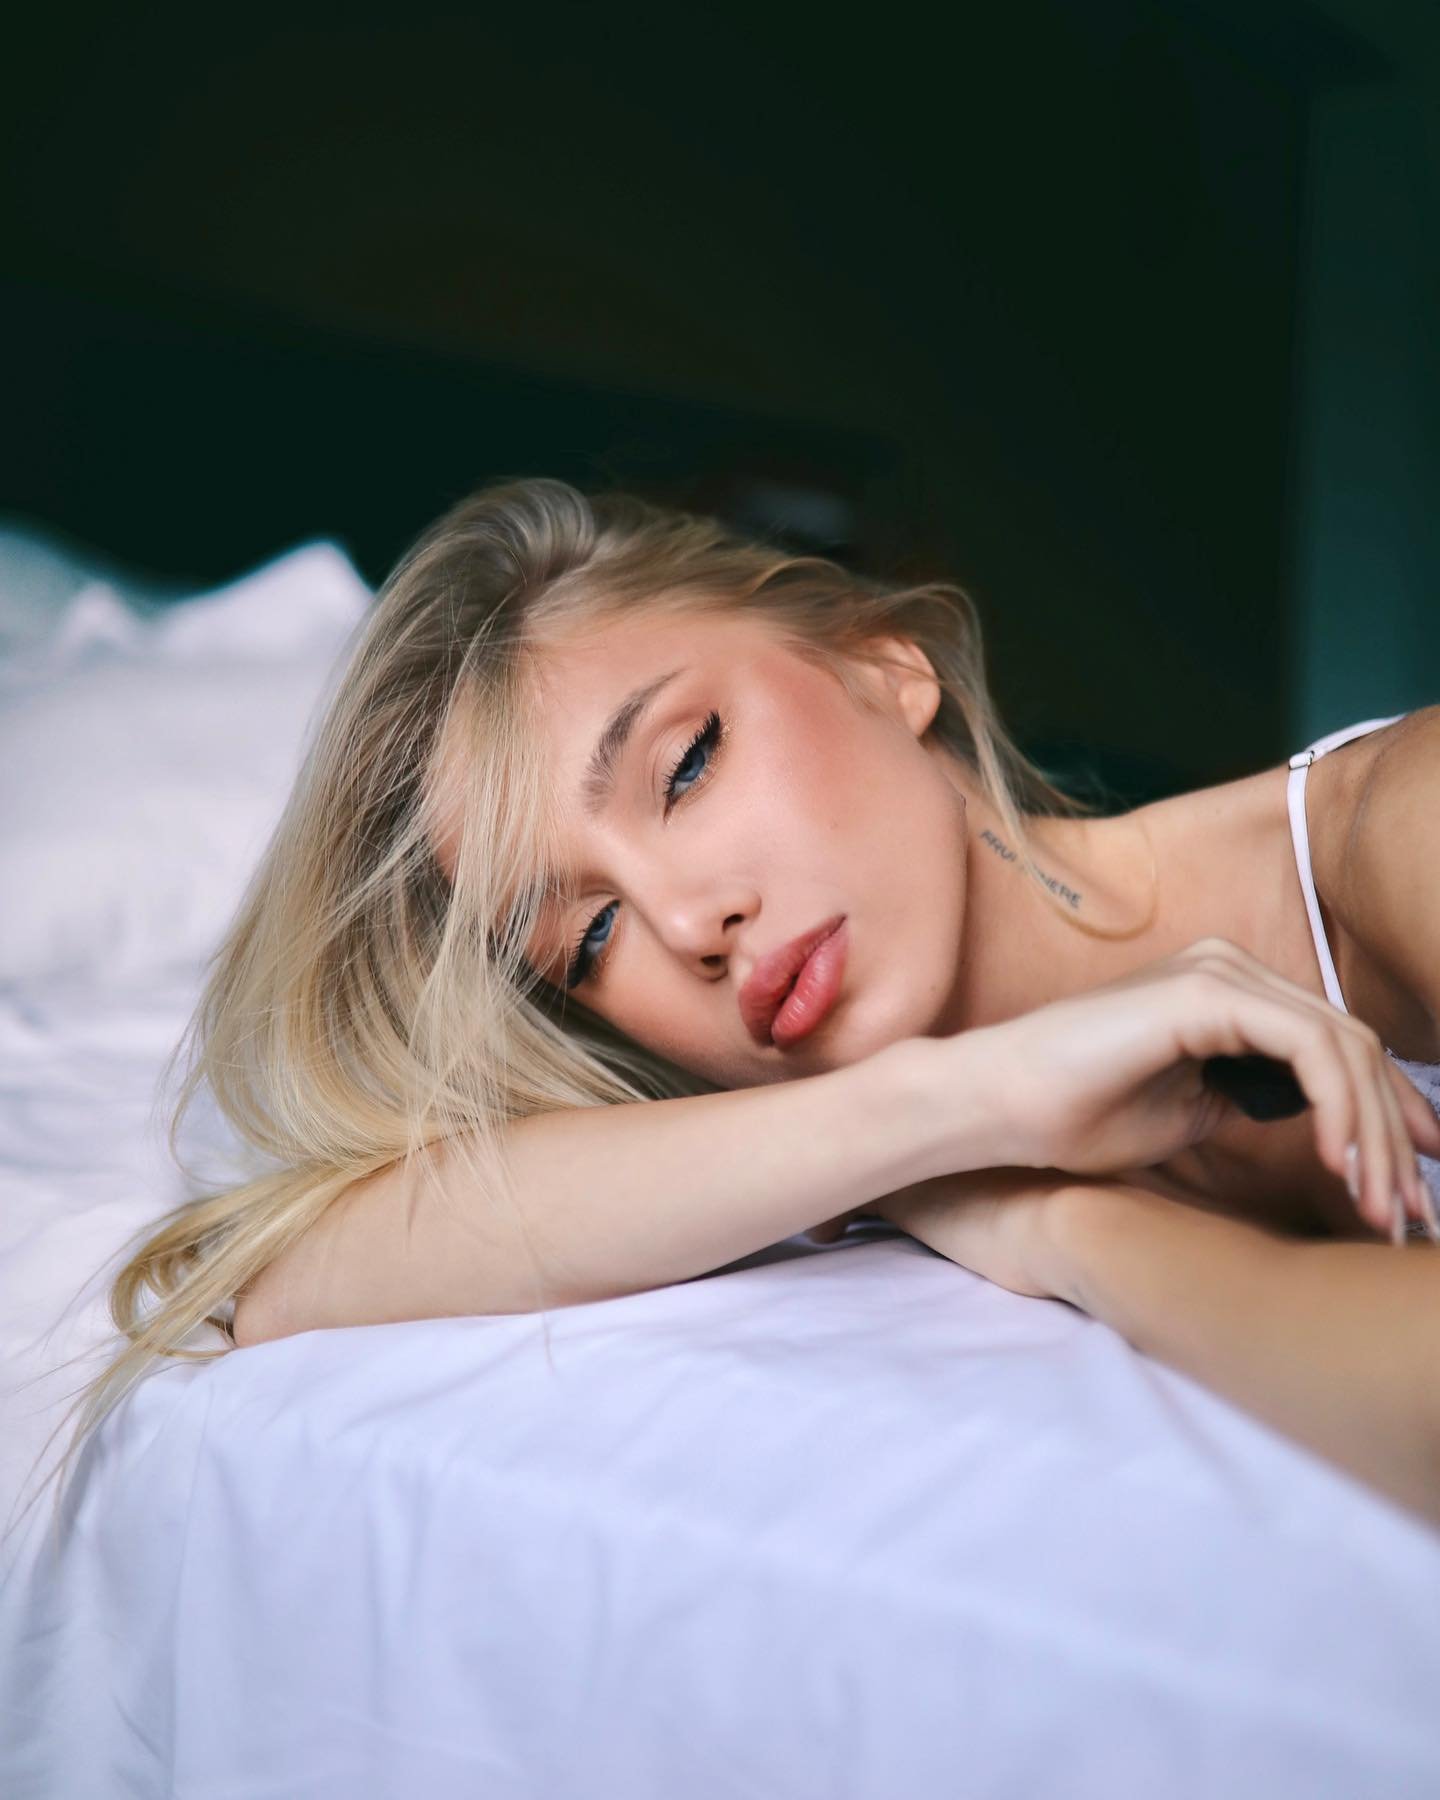 Joao Almeida Fotografo modelo loira em foto de rosto deitada